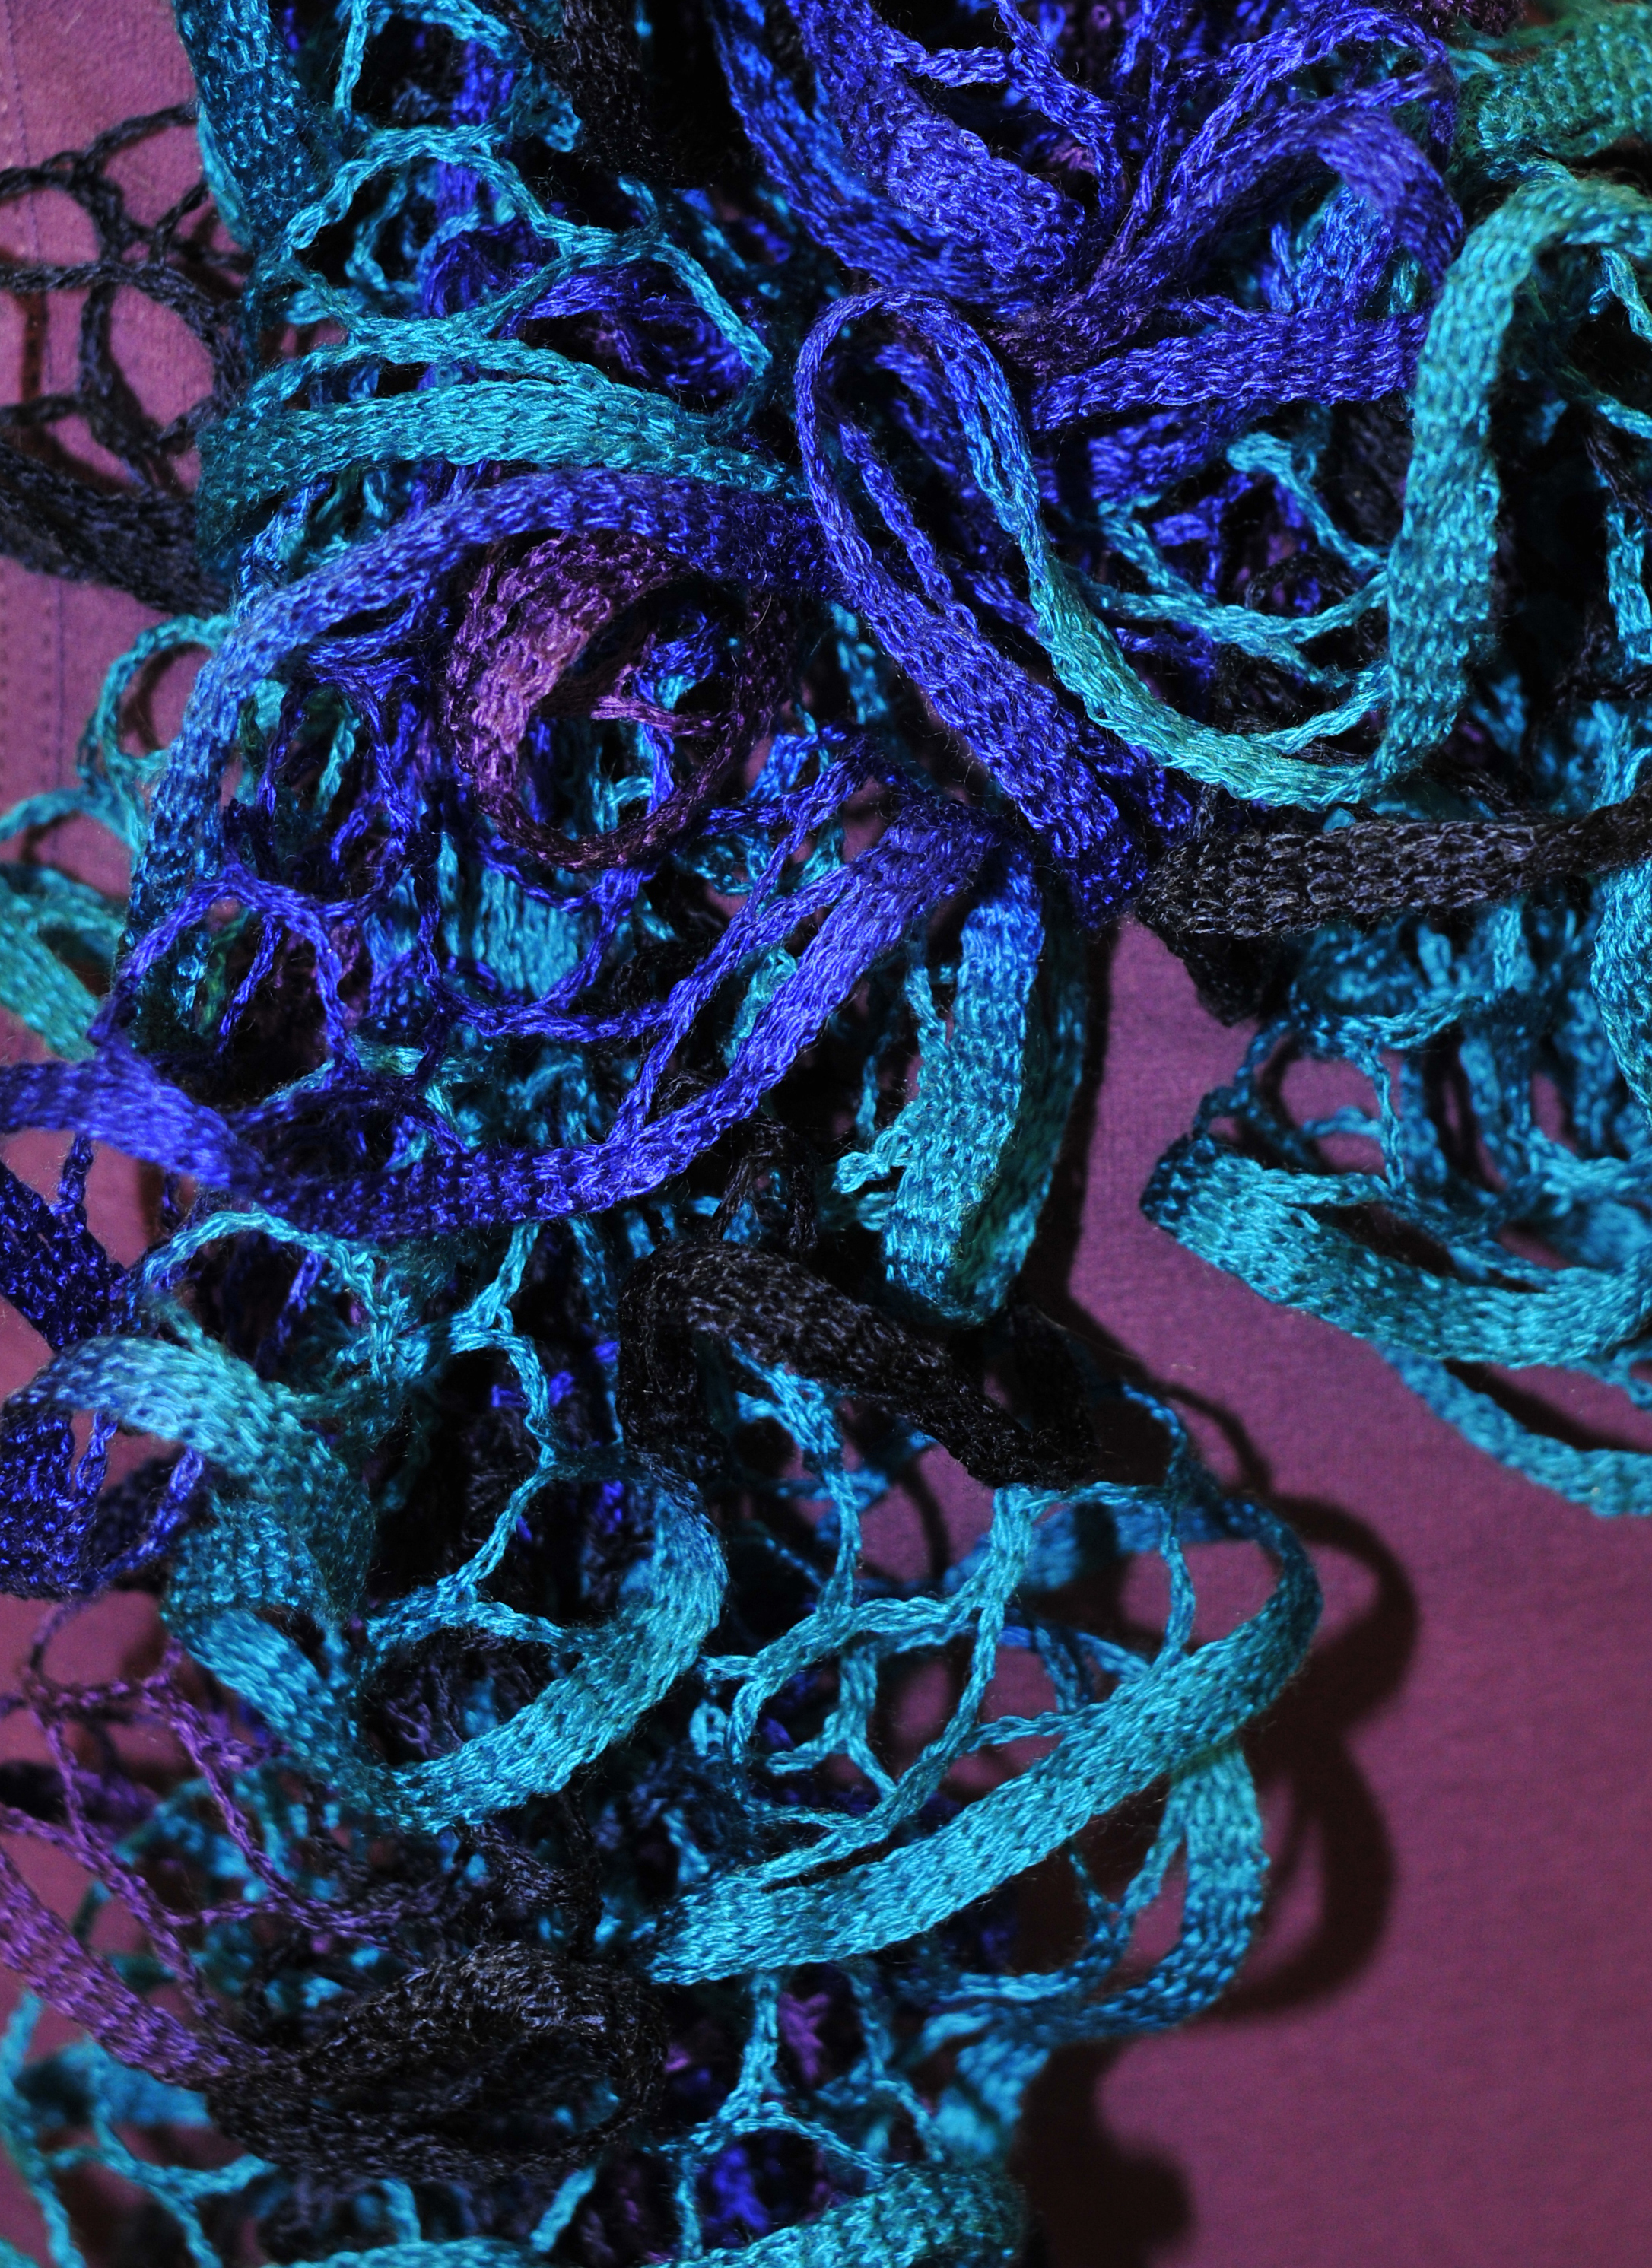 LionВ® Crochet Cotton Yarn : Product Information : Lion Brand Yarn